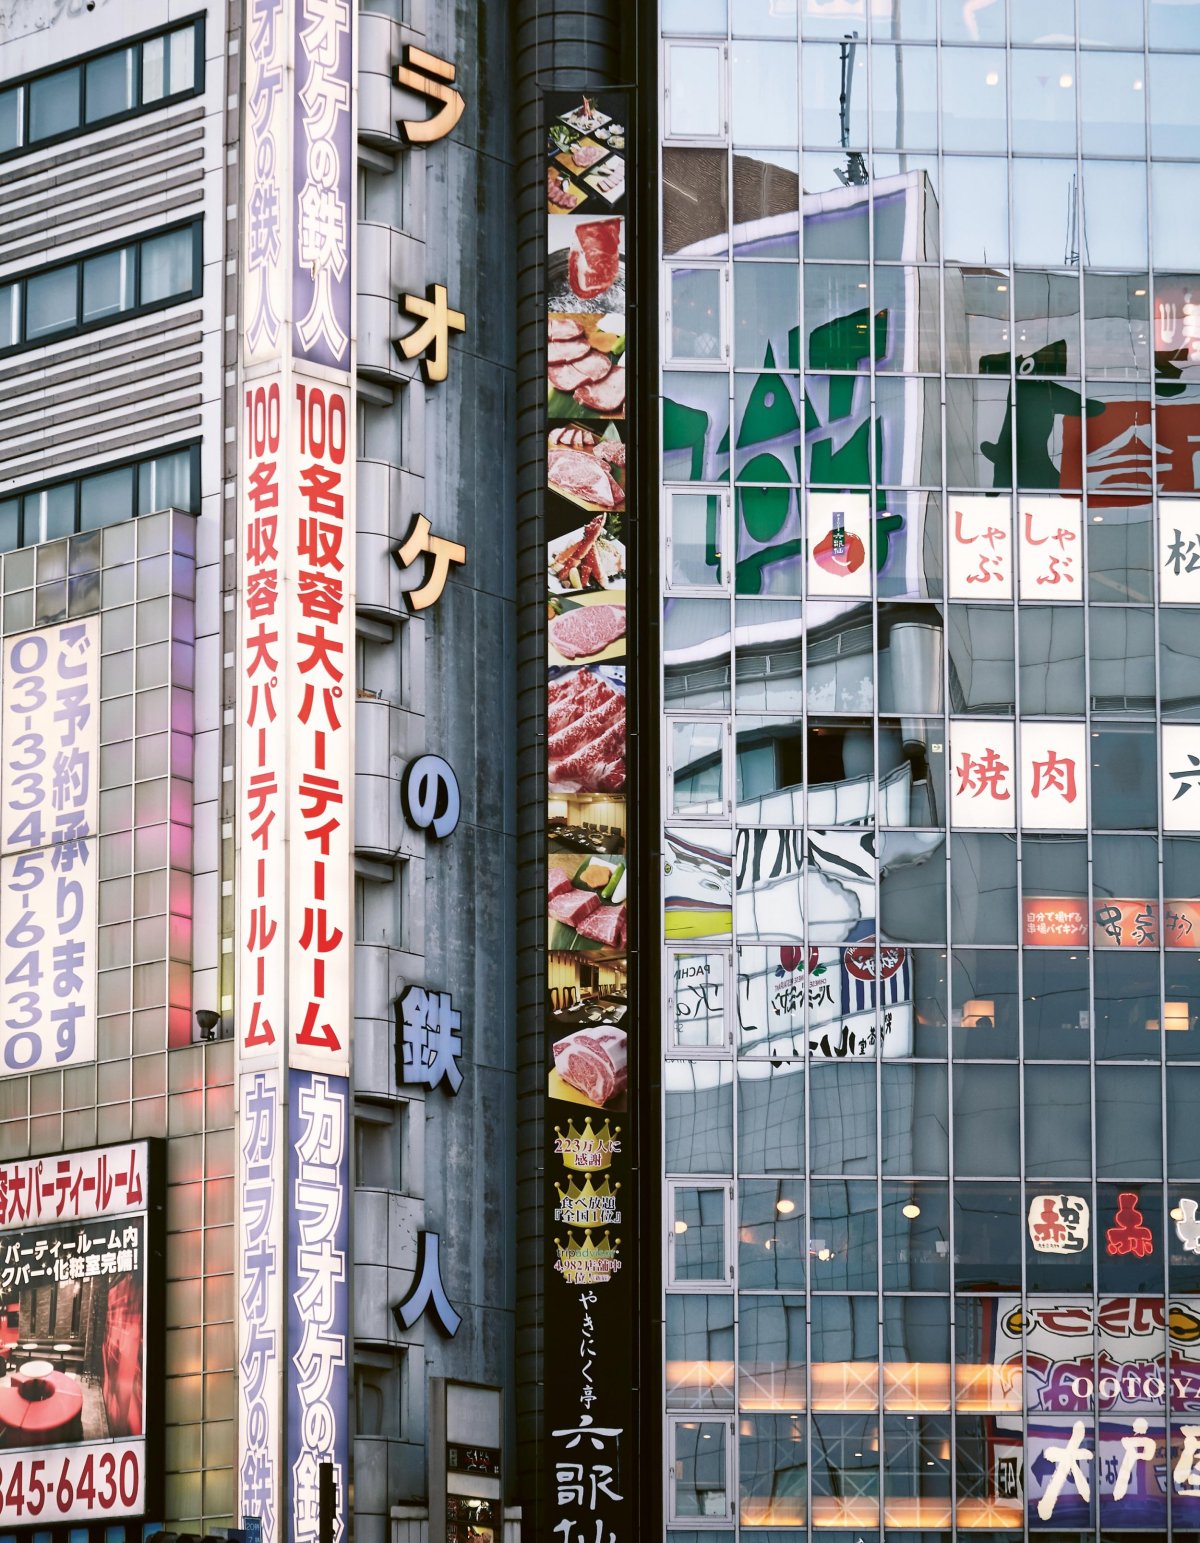 Tokyo Stories_pg163 photo credit Nassima Rothacker